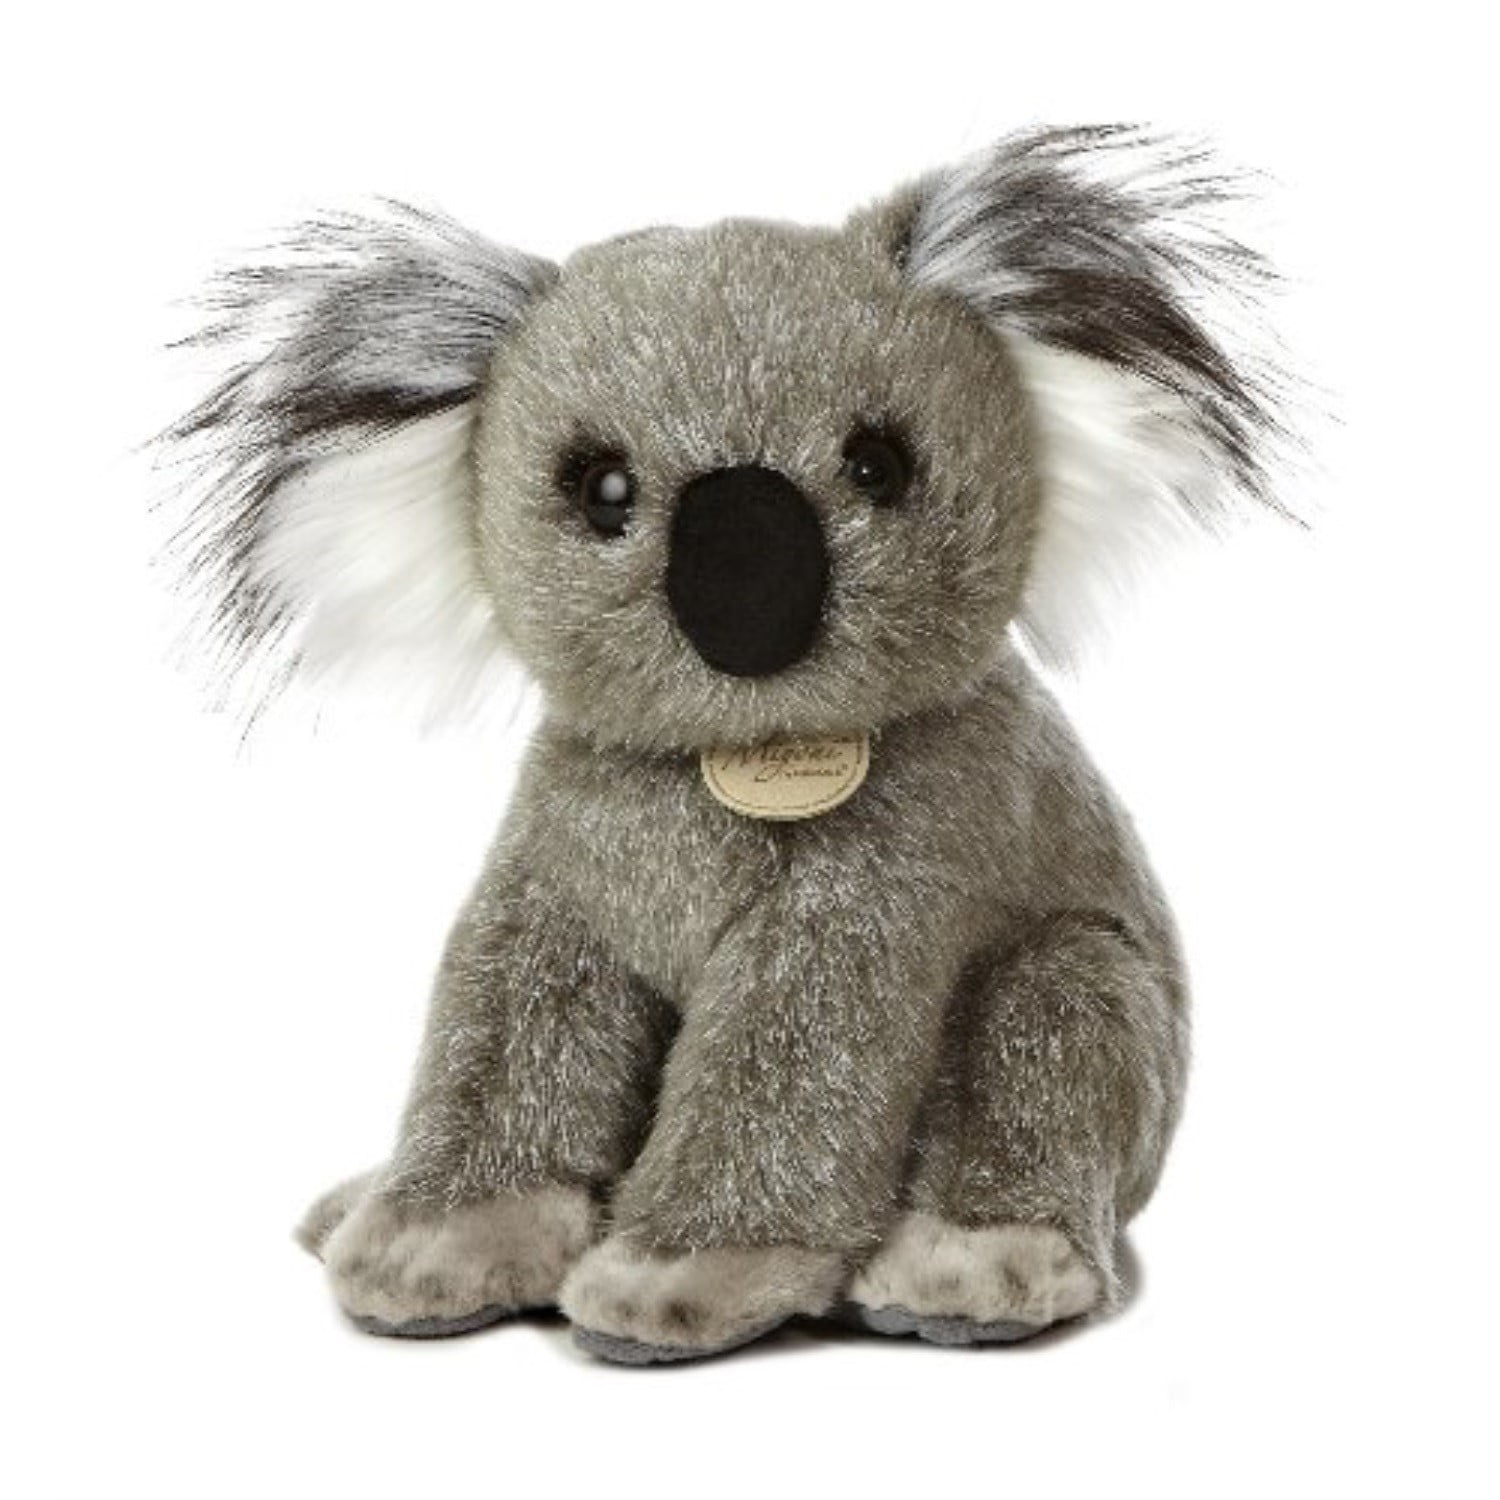 Koda - The Plush Koala Bear Toy - 40 Inches Tall